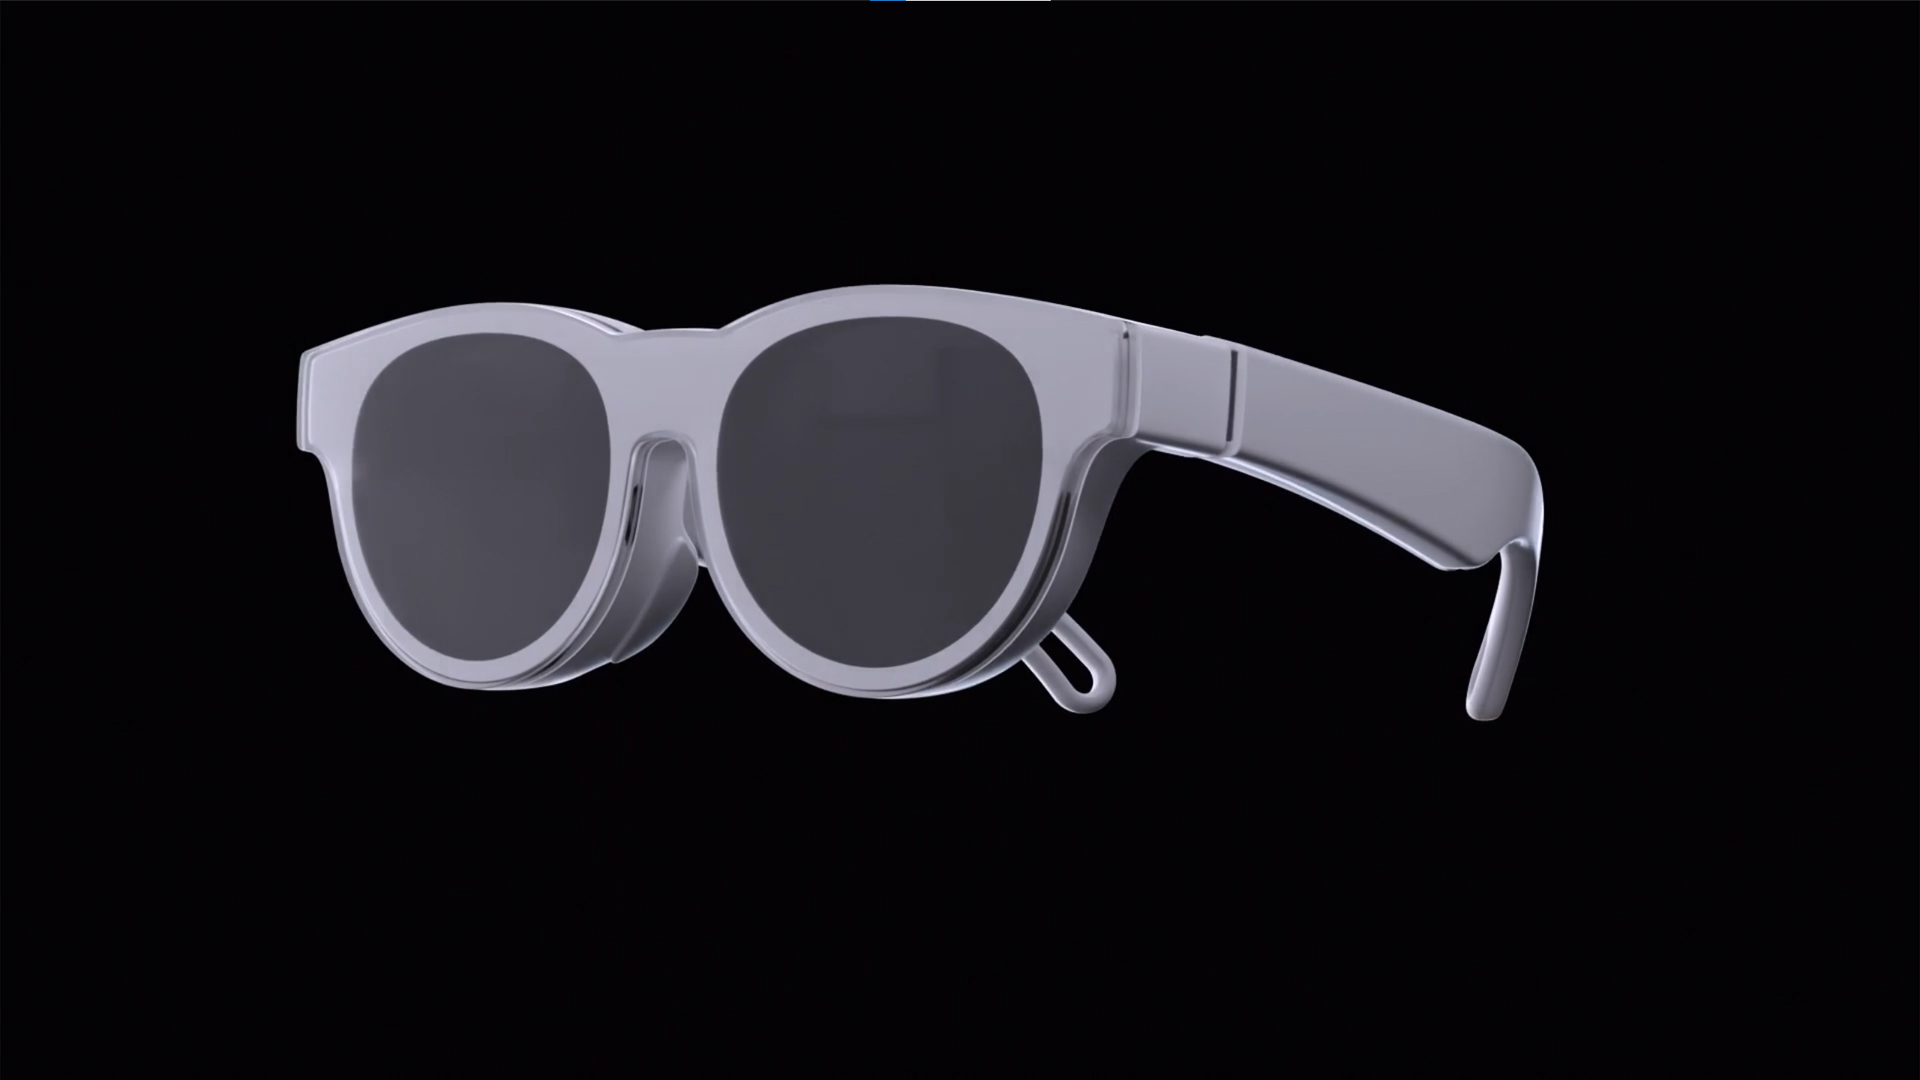 Samsung-AR-Glasses-Design.jpg